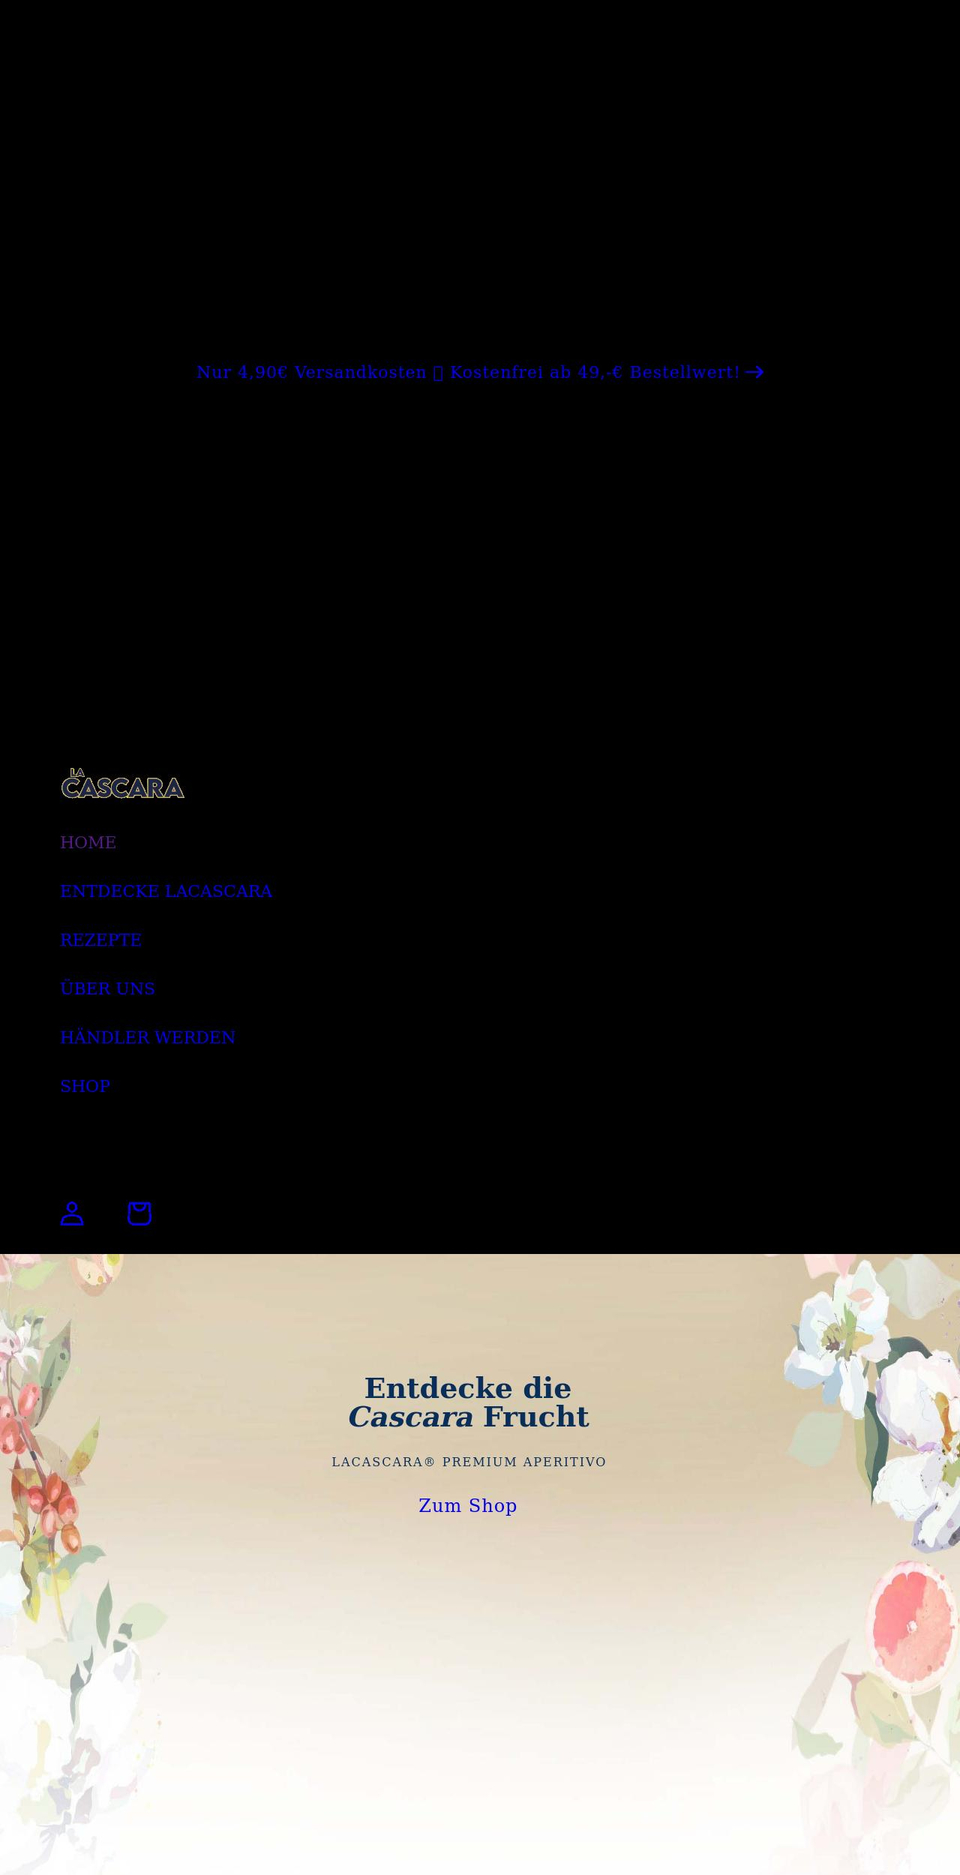 lacascara.de shopify website screenshot